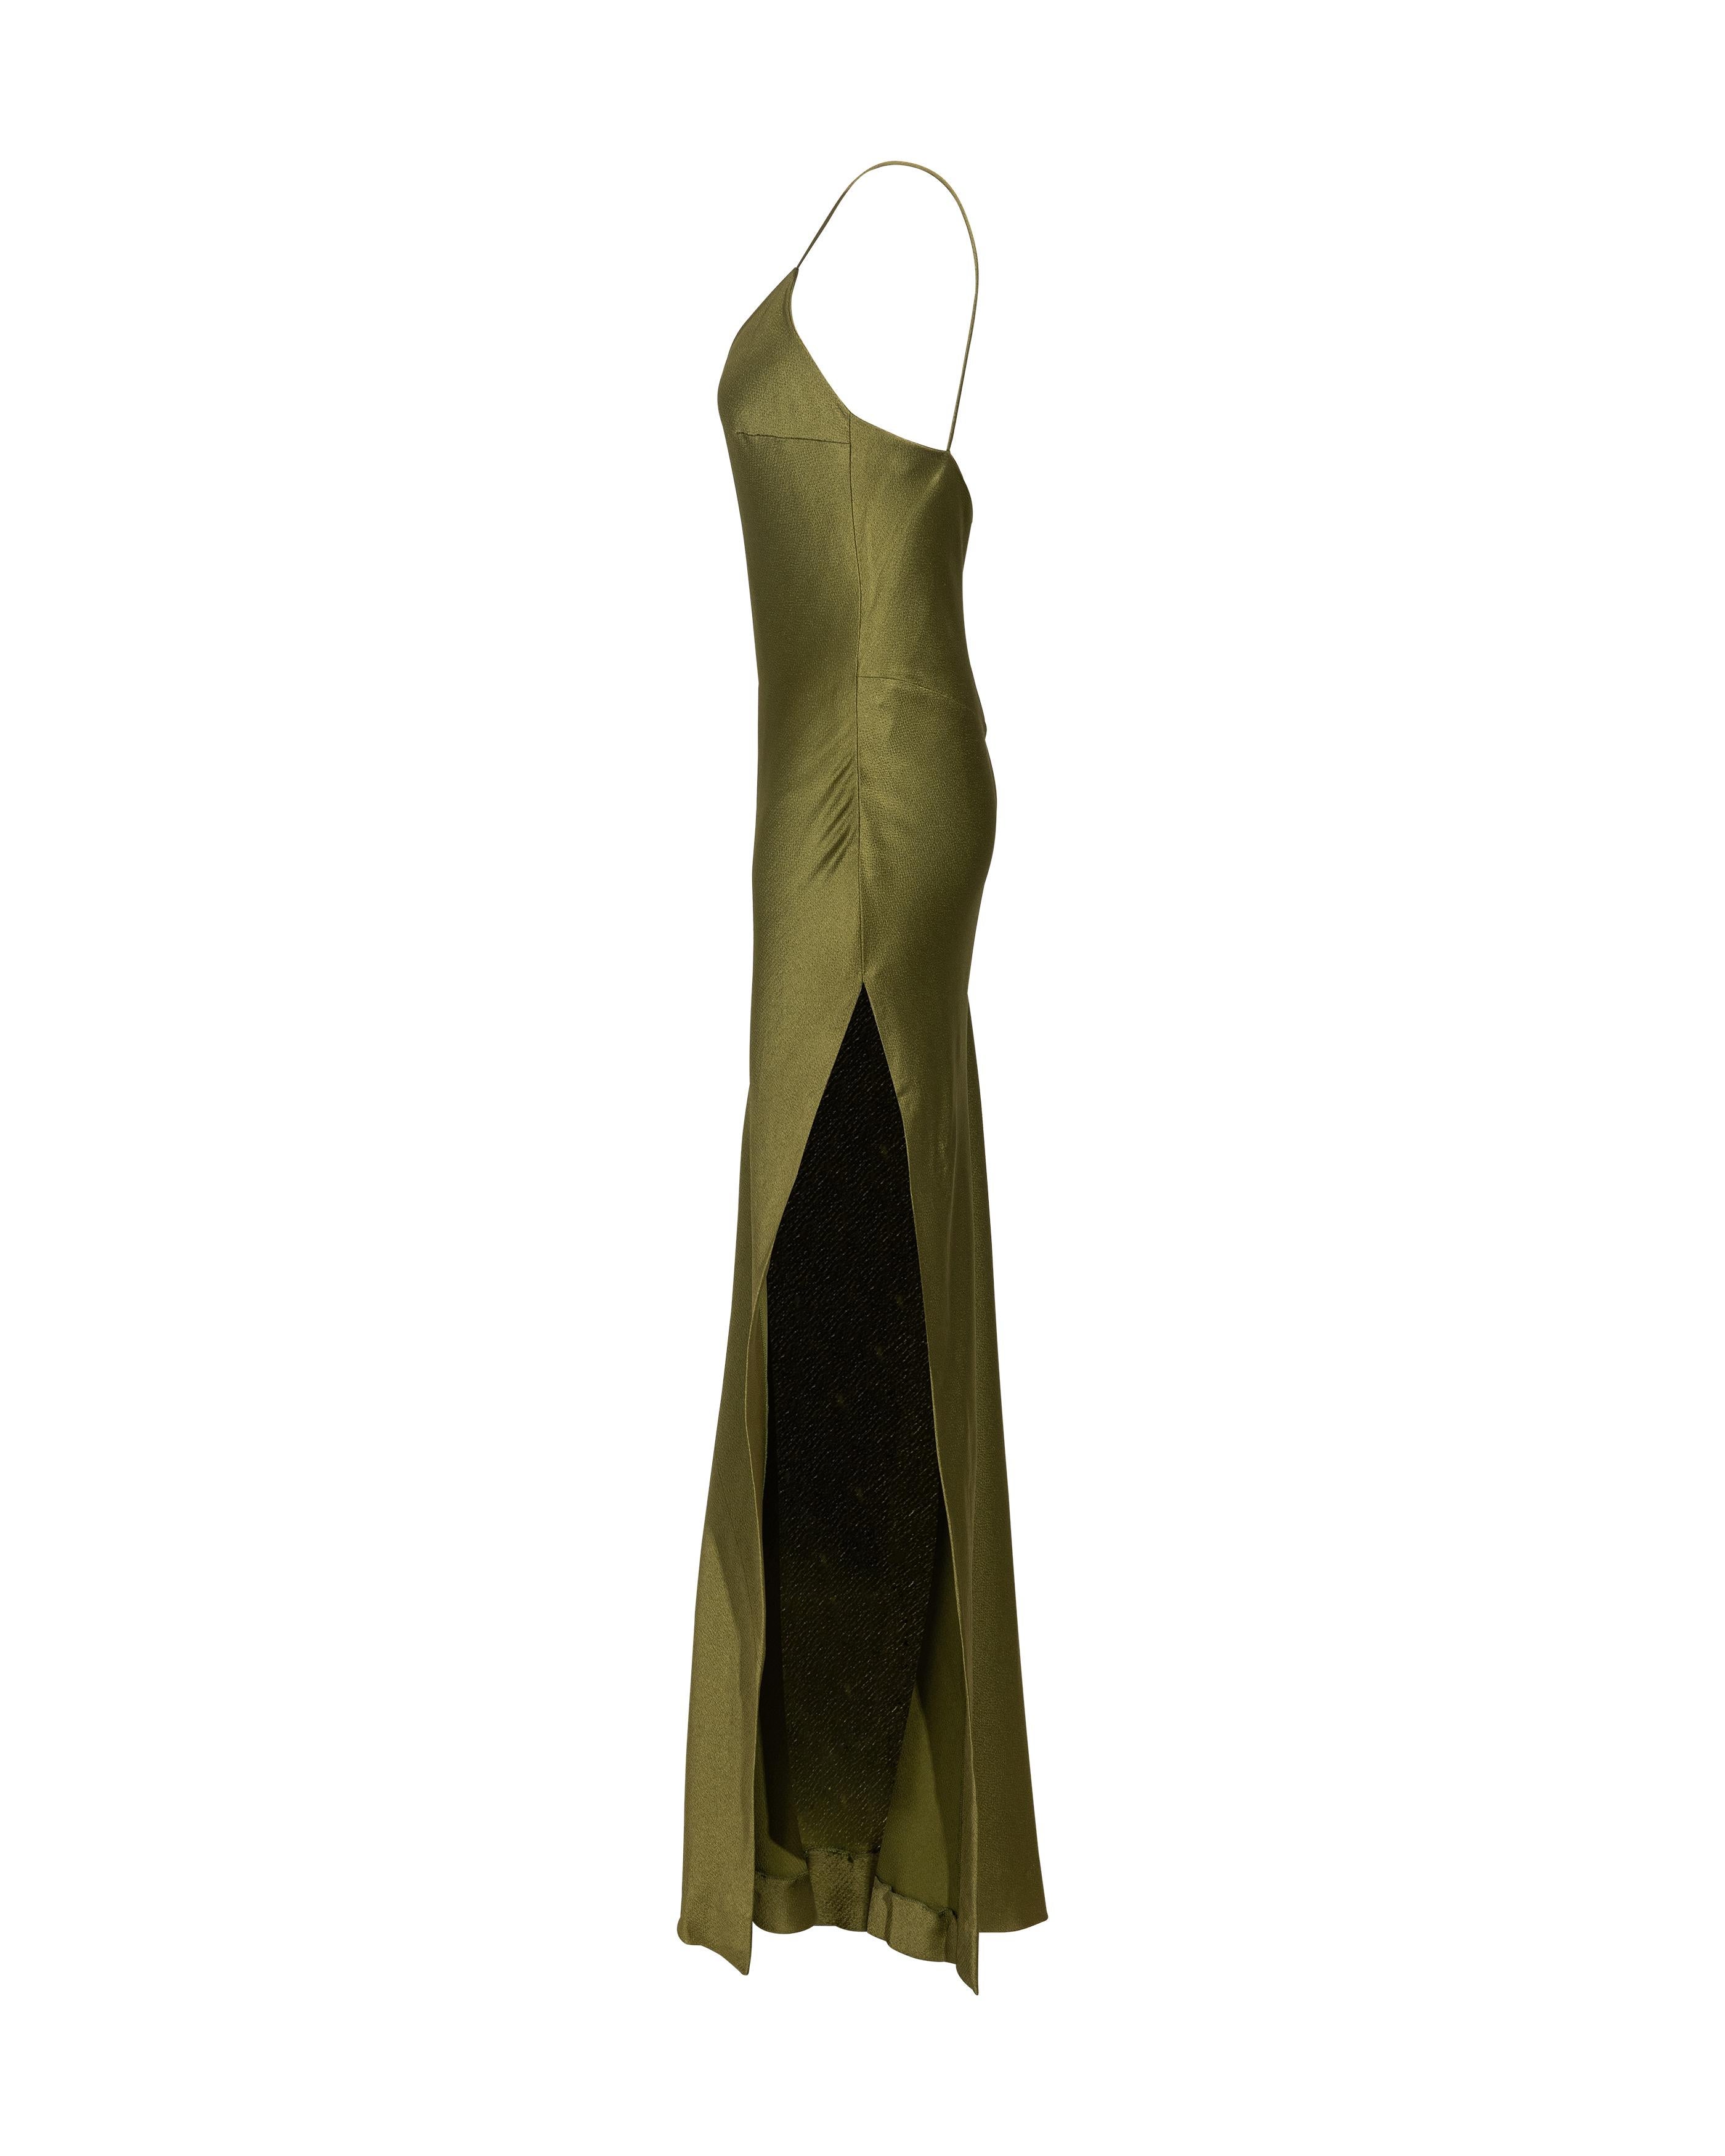 Women's S/S 1999 Christian Dior by John Galliano Olive Green Bias Cut Slip Gown